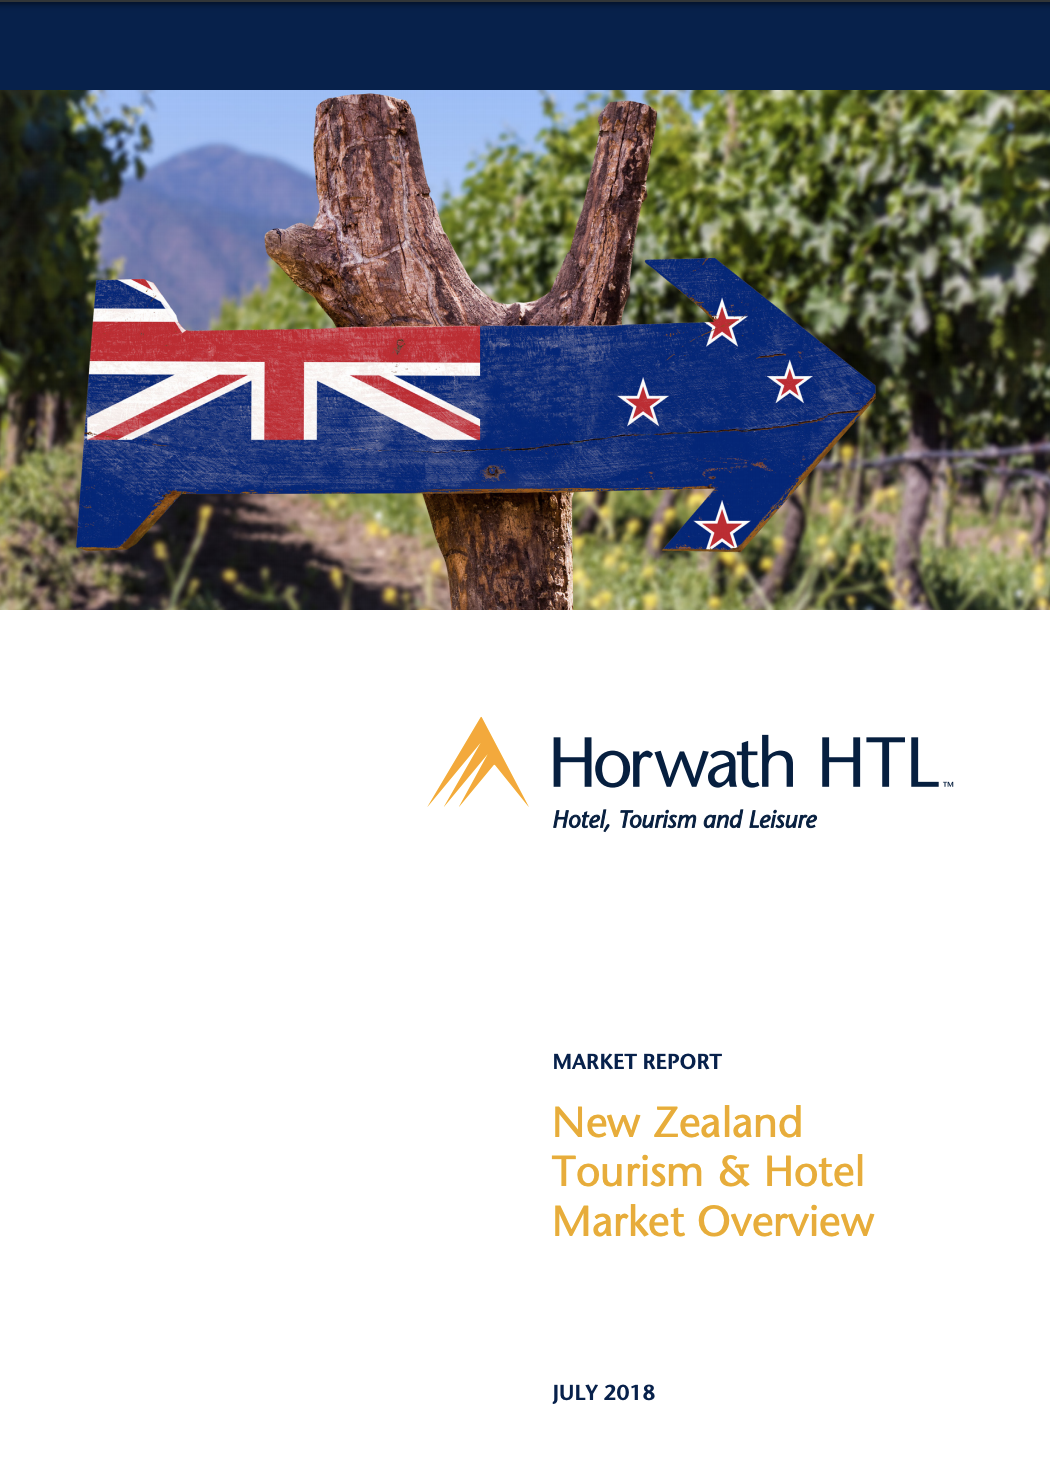 Market Report: New Zealand Tourism & Hotel Market Overview